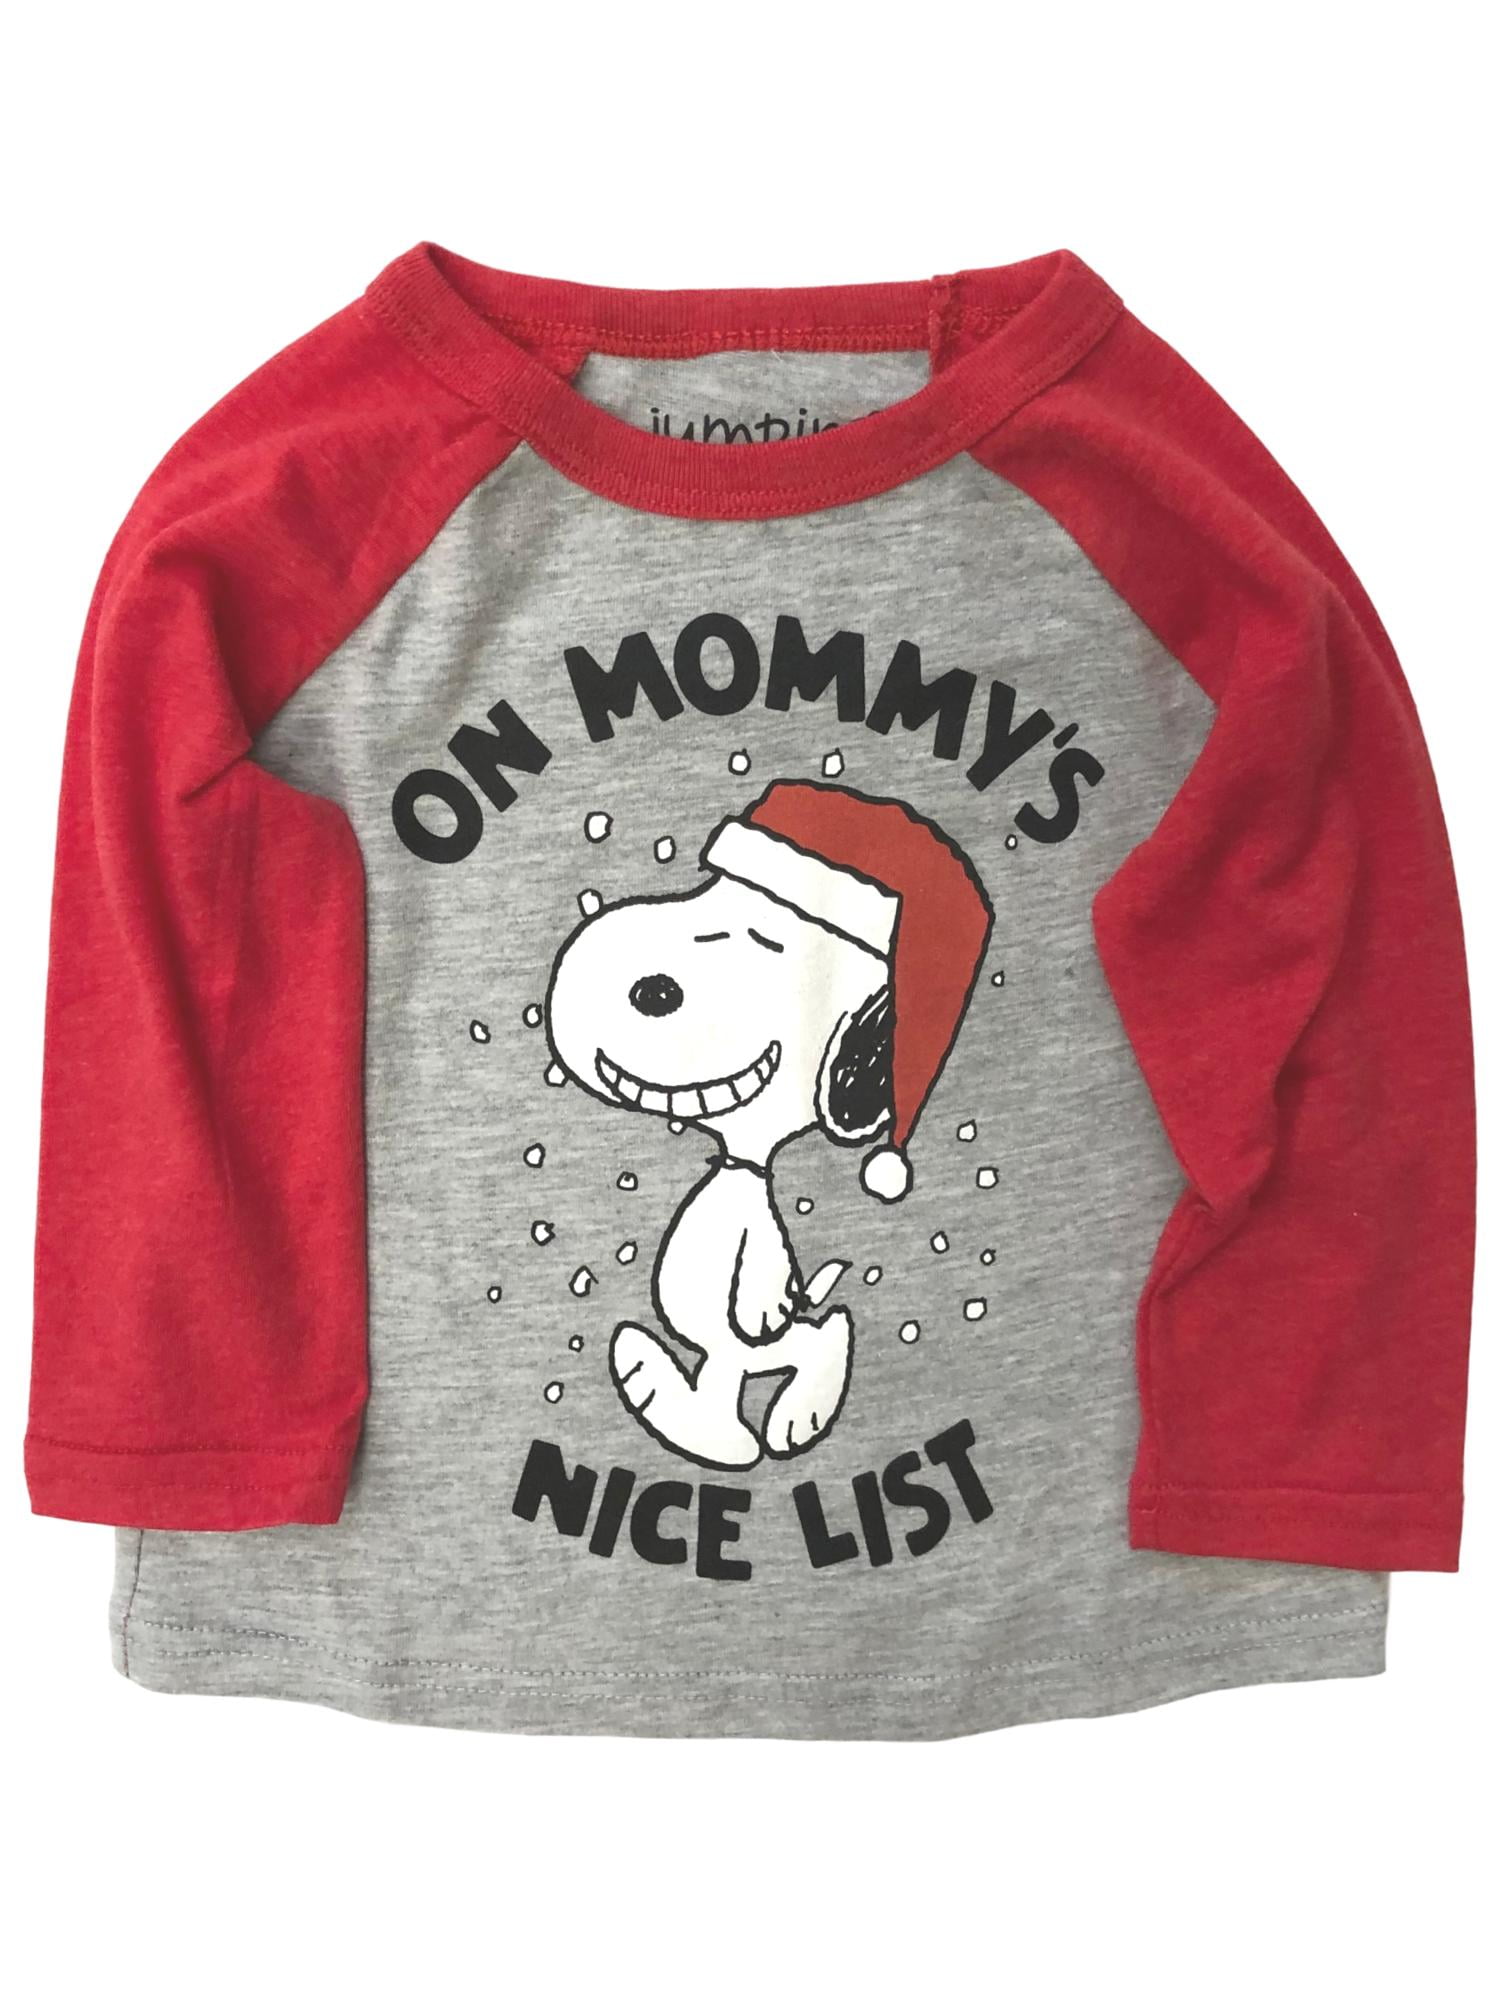 Snoopy Christmas Lights Cute Onesie Bodysuit Shirt 